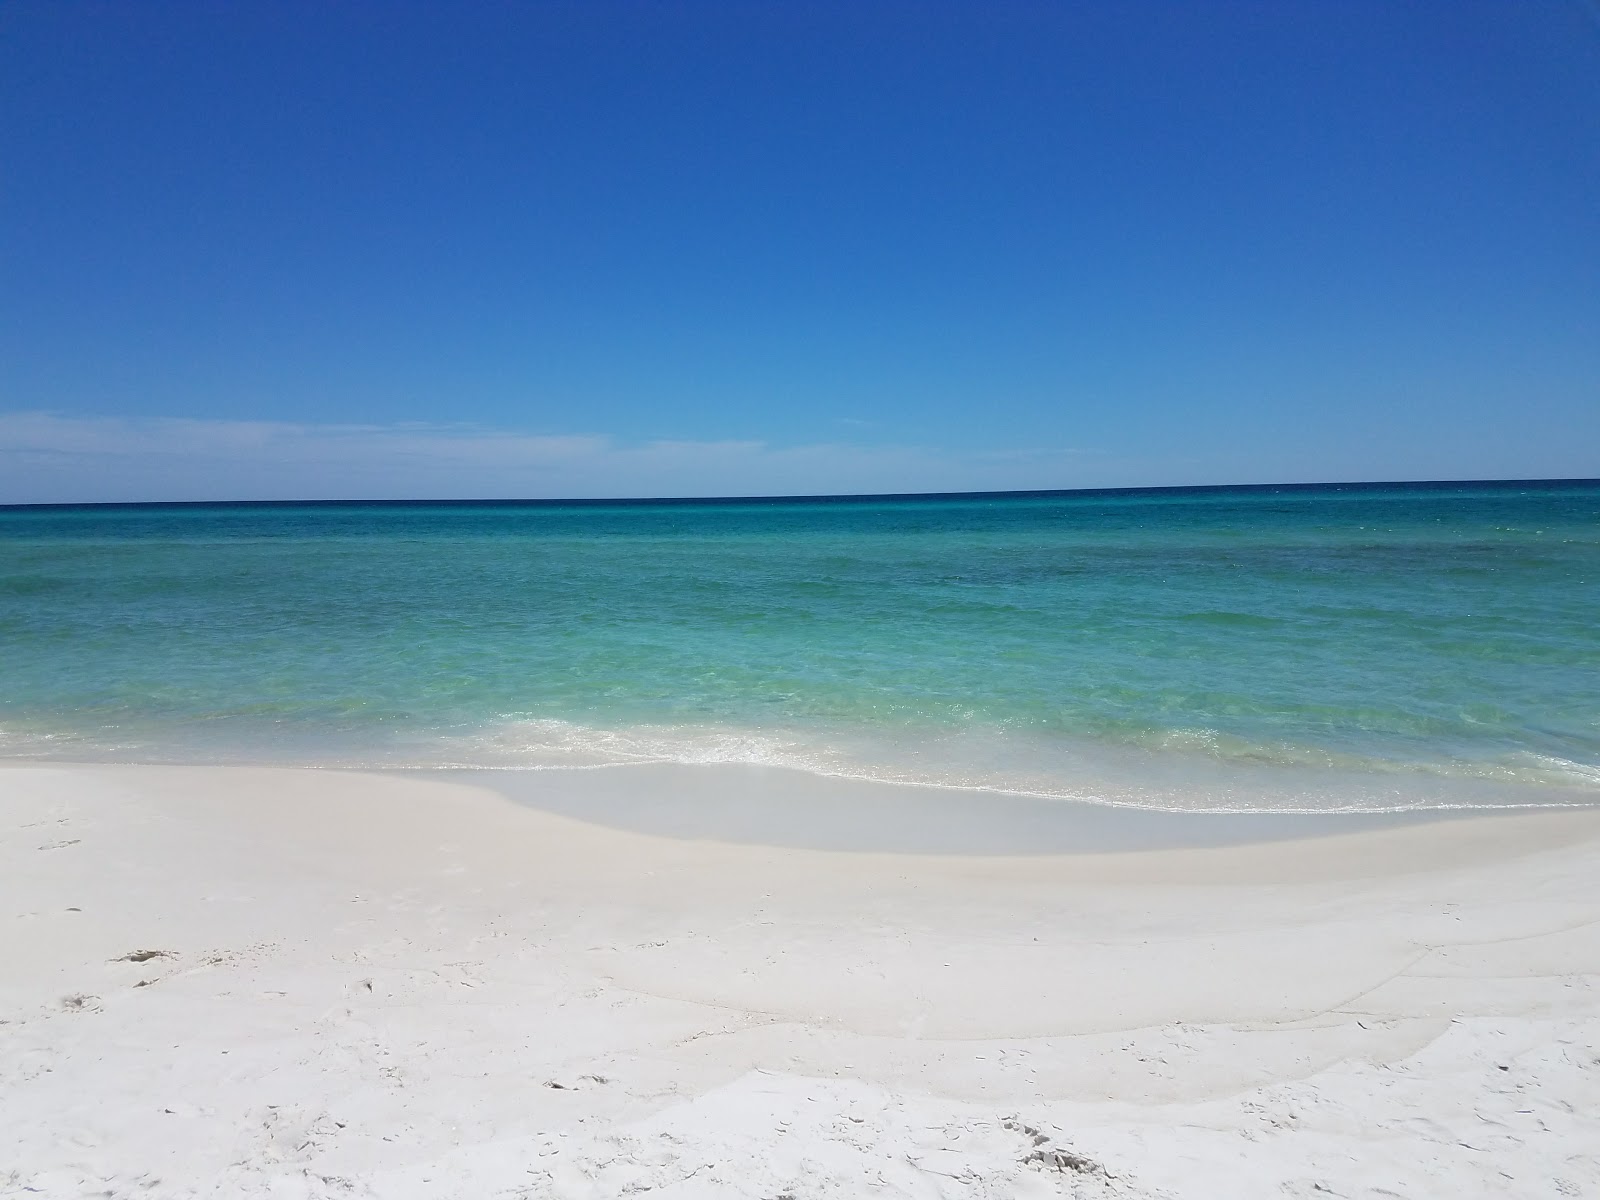 Fotografie cu Gulf Lakes Beach - locul popular printre cunoscătorii de relaxare